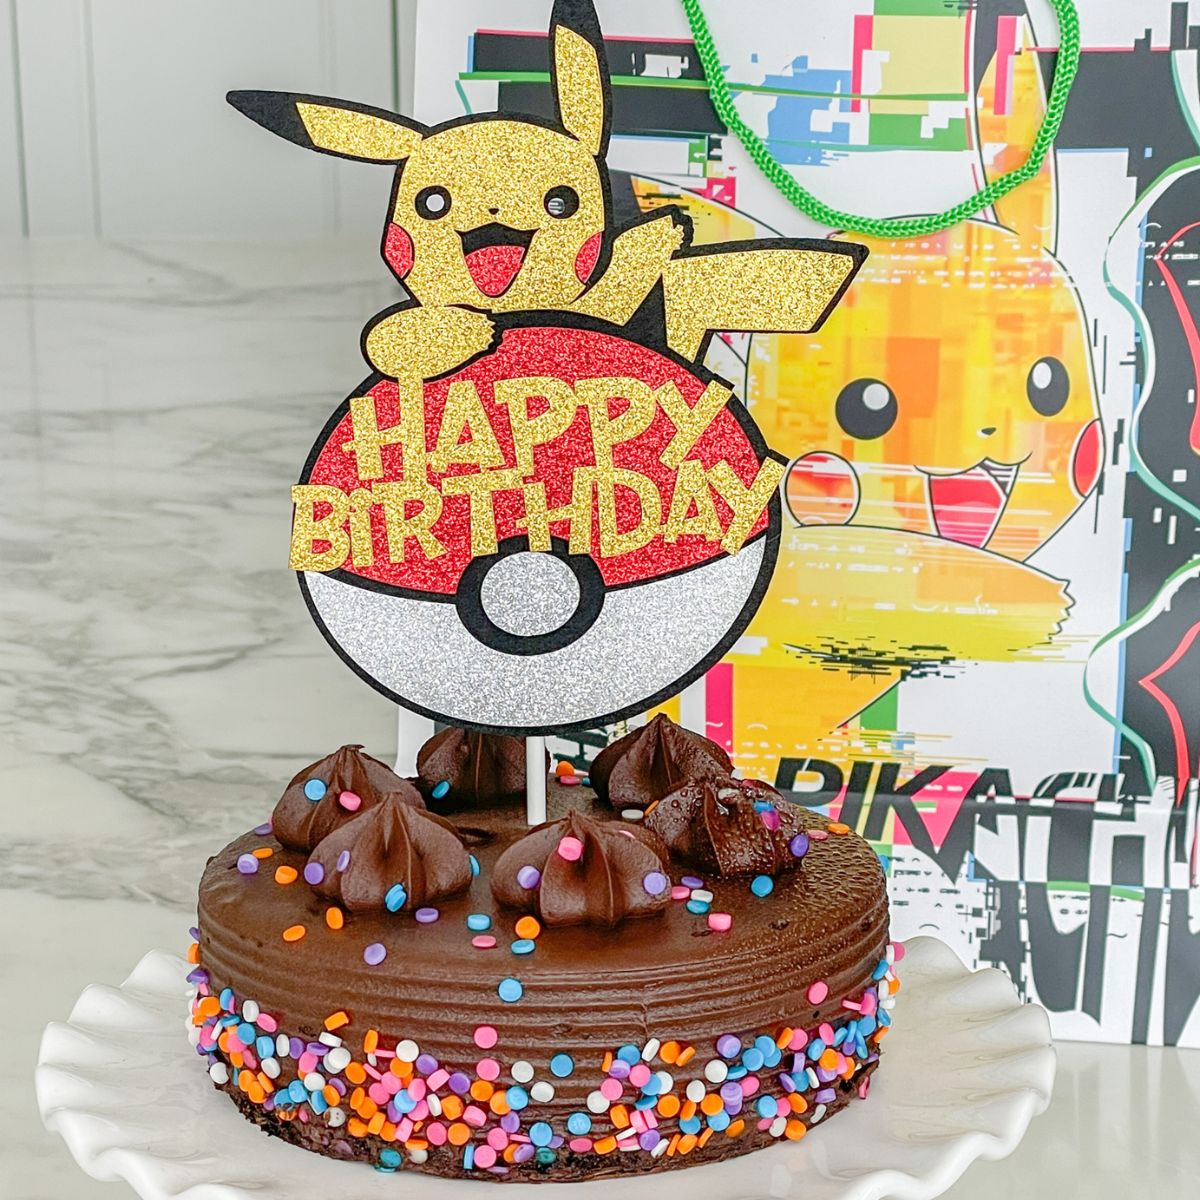 Pokemon pikachu Cake Singapore - Kids party cake Order online - River Ash  Bakery